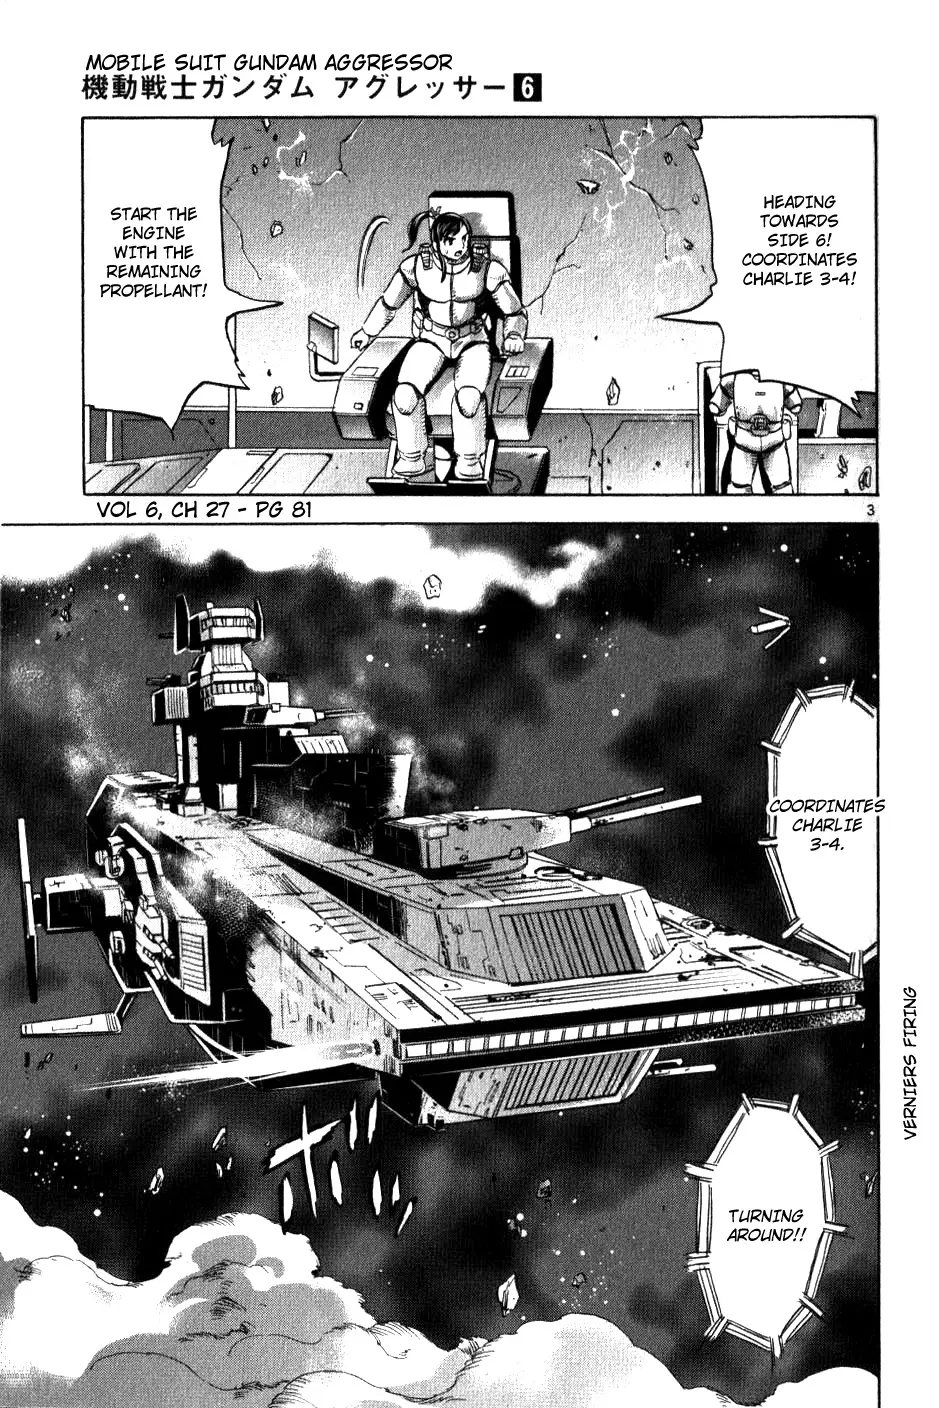 Mobile Suit Gundam Aggressor - 27 page 3-615c0a45